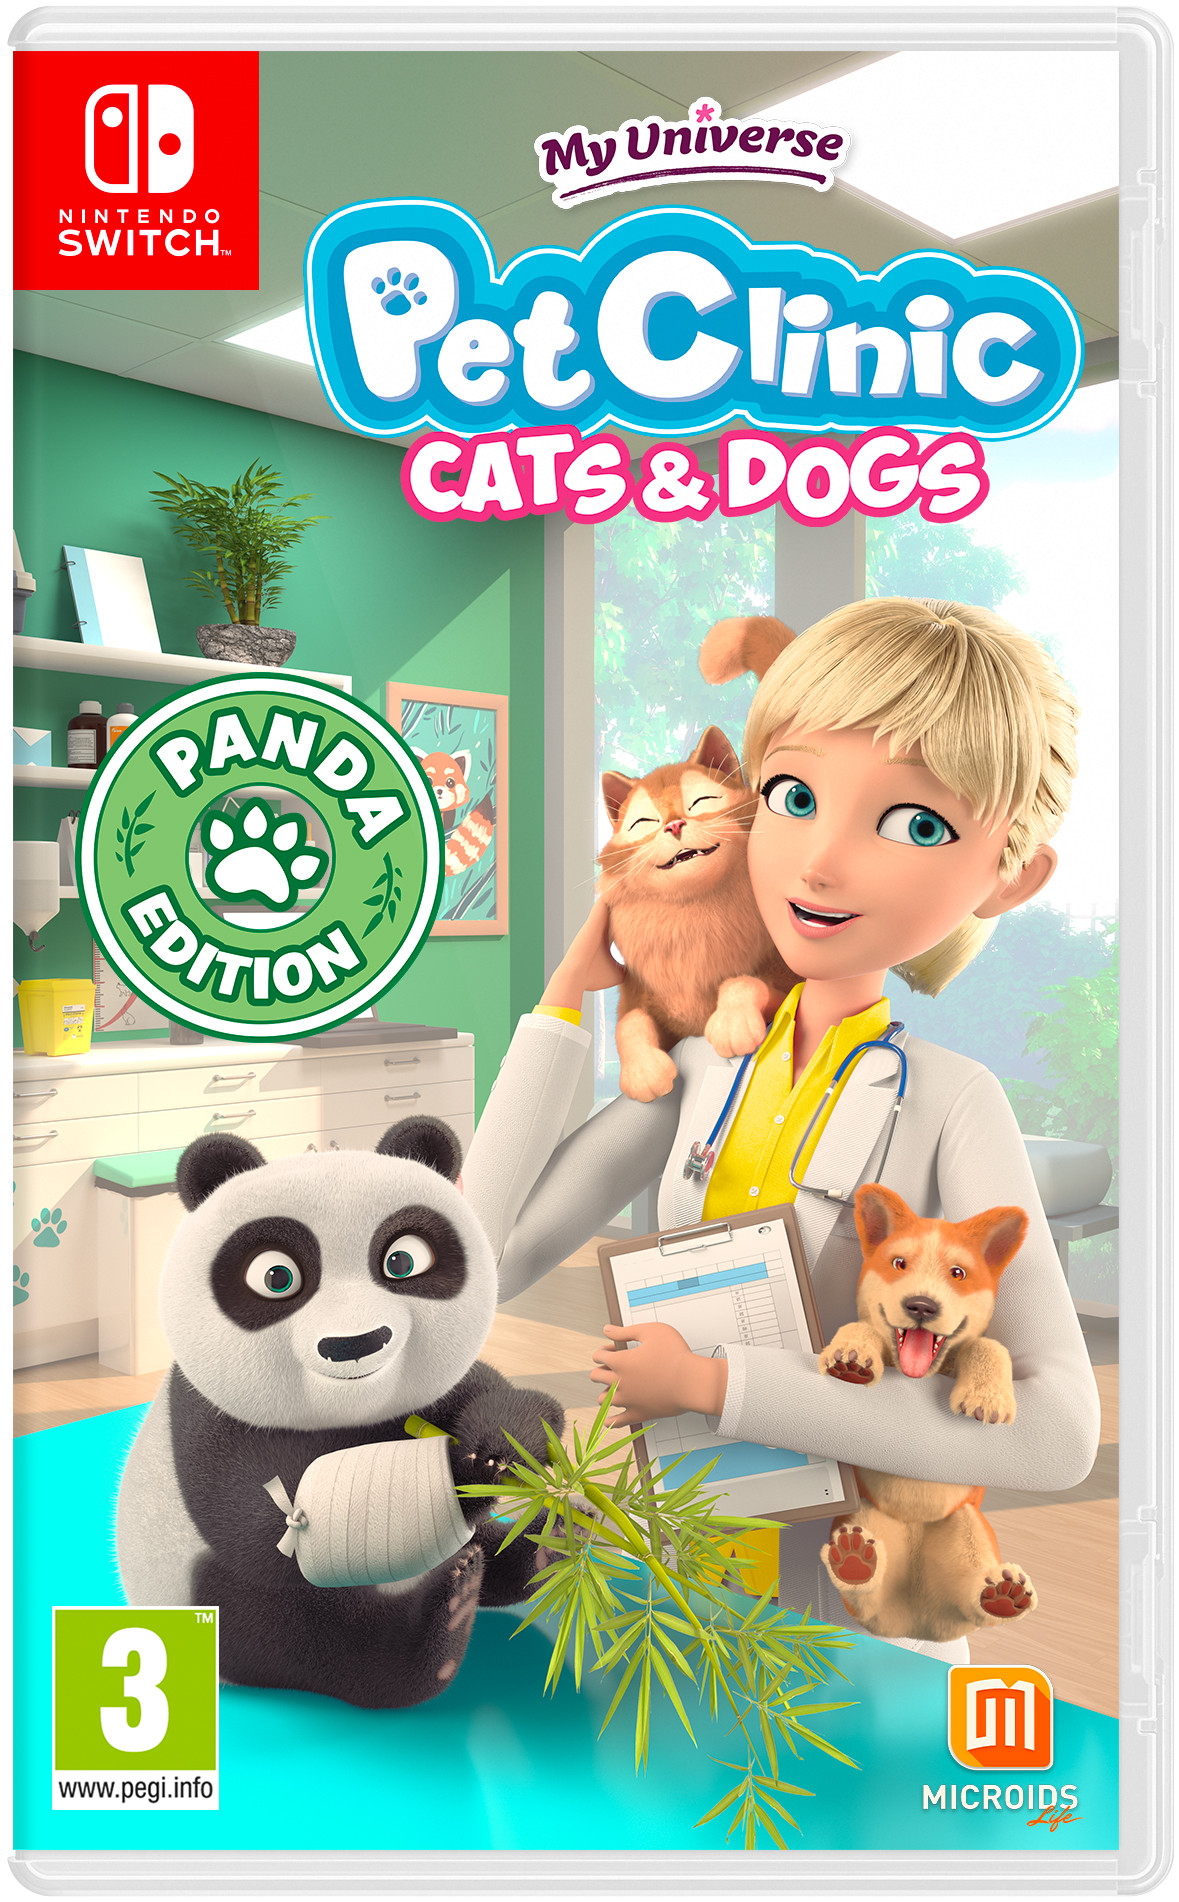 My Universe Pet Clinic Cats & Dogs Panda Edition - Nintendo Switch